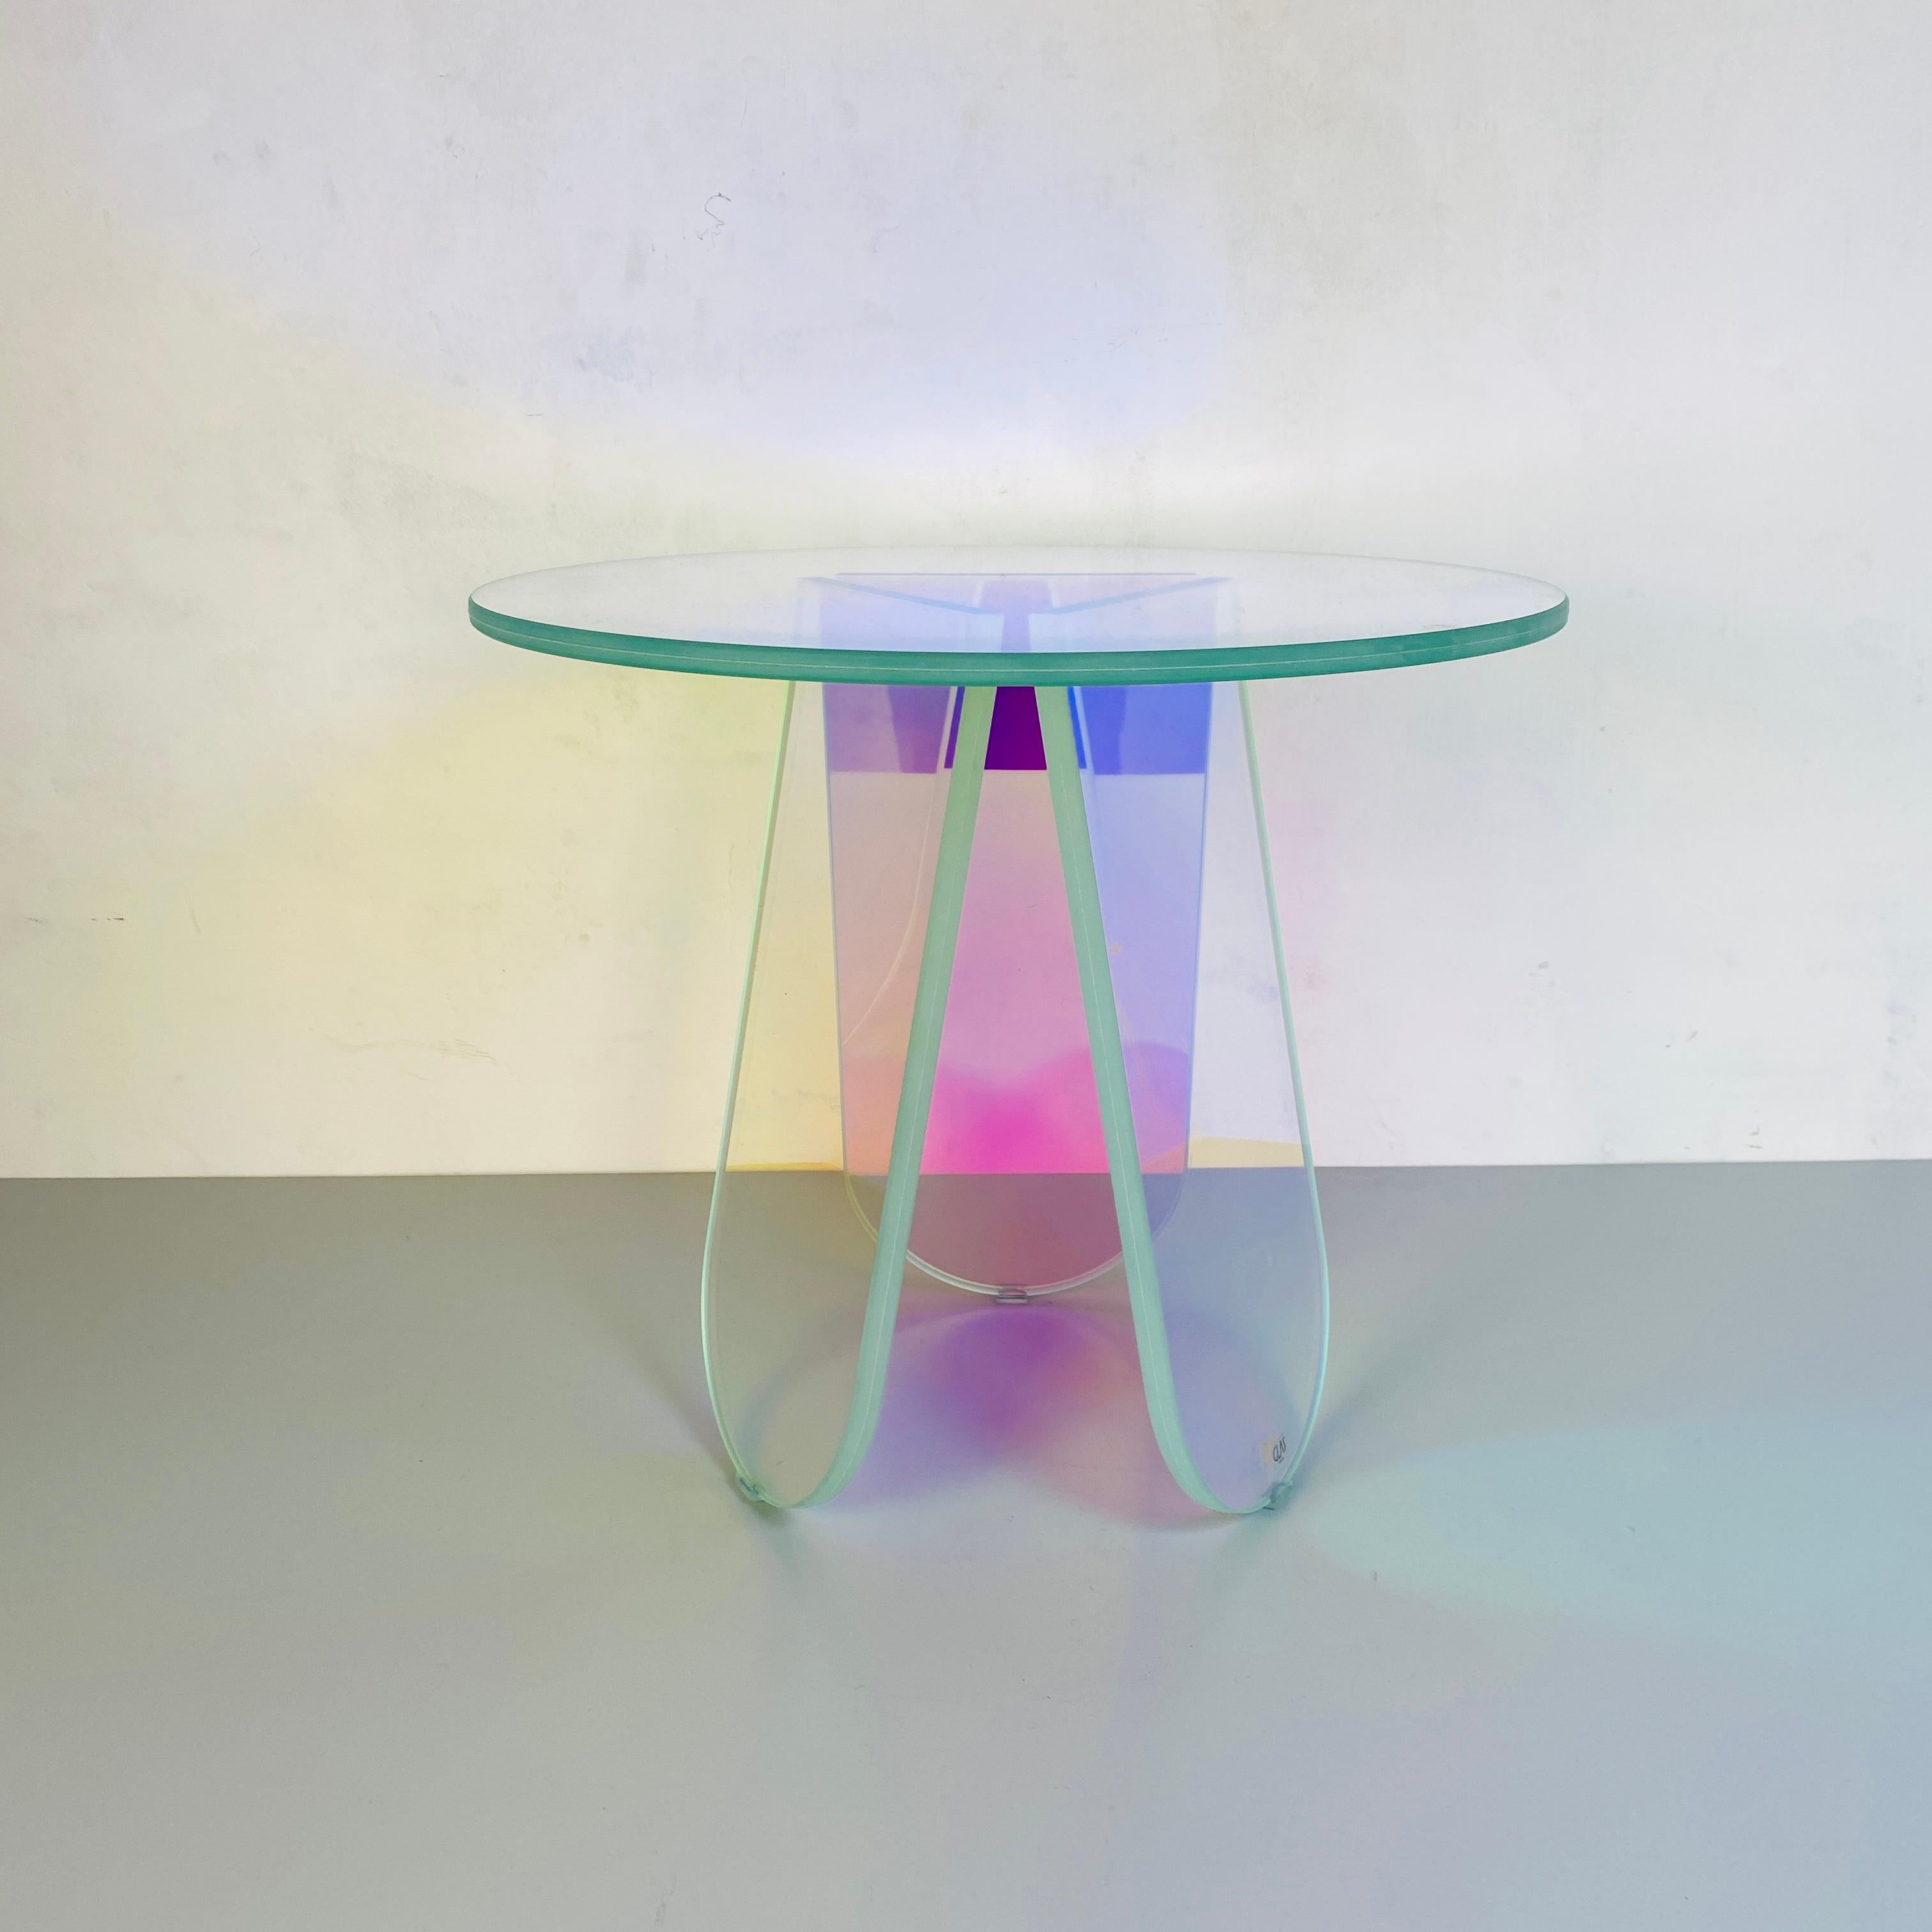 Italian Round Iridescent Glass Coffee Table by Patricia Urquiola for Glas Italia, 2015